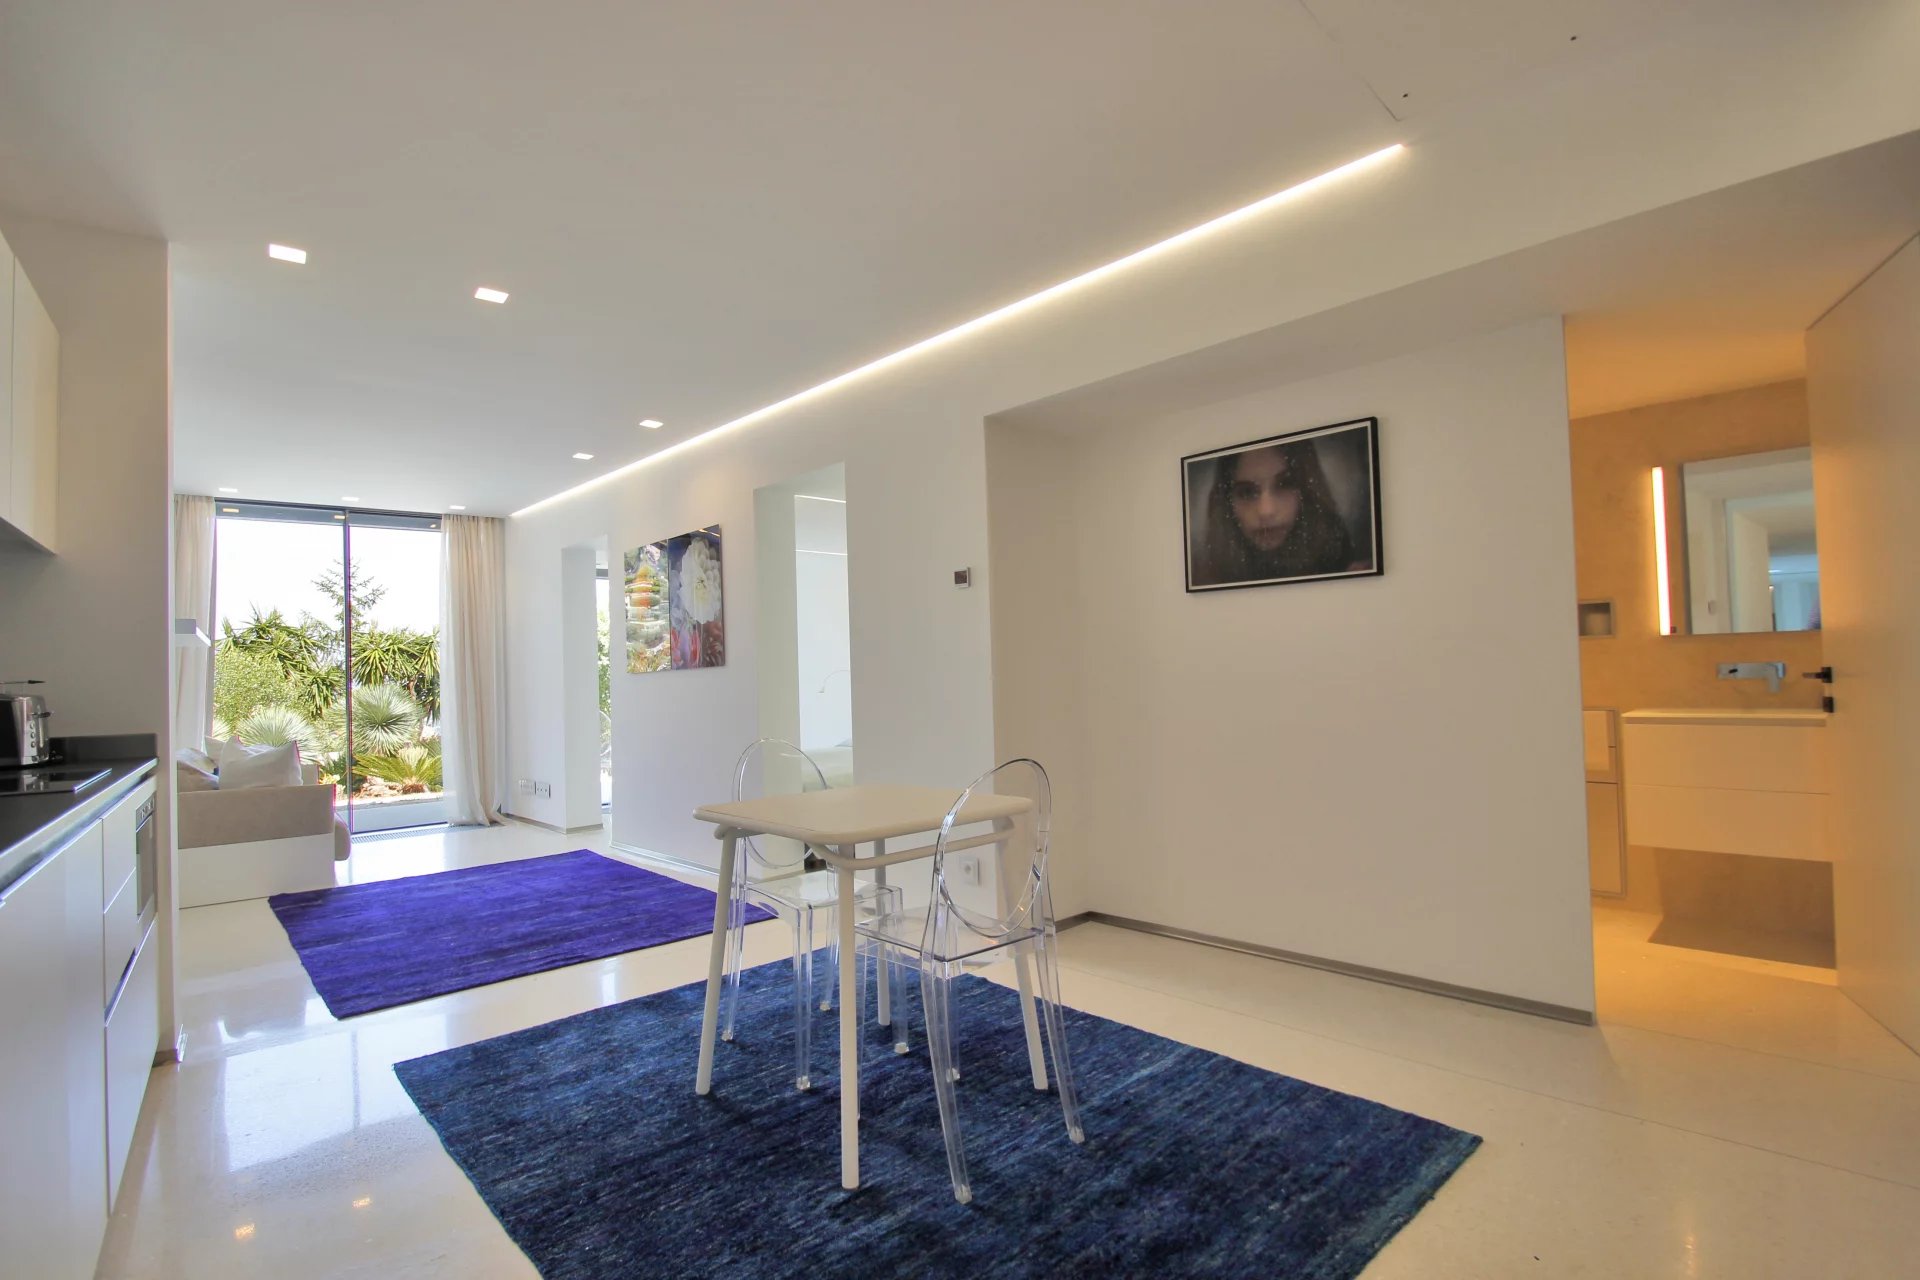 BEAUSOLEIL: Moyenne Corniche - breathtaling modern villa - 5 bedrooms - Panoramic sea view